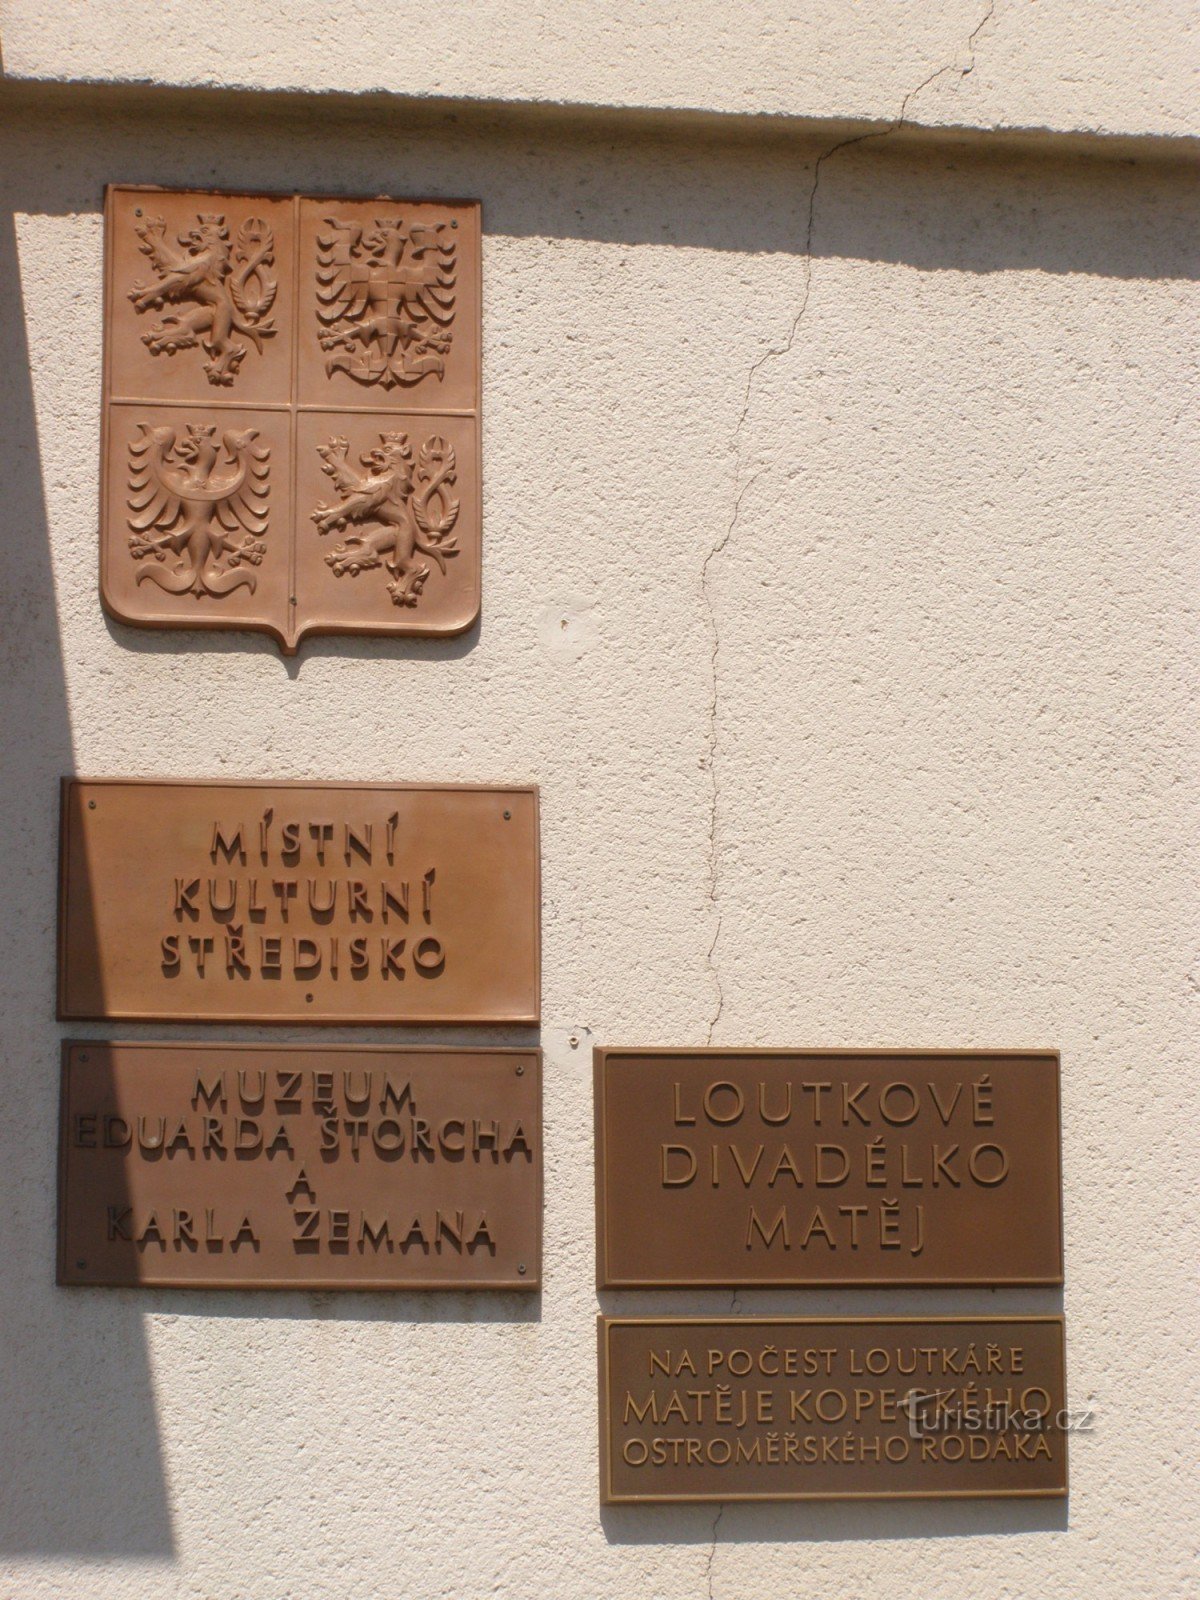 Ostroměř - museo de Eduard Štorch y Karel Zeman